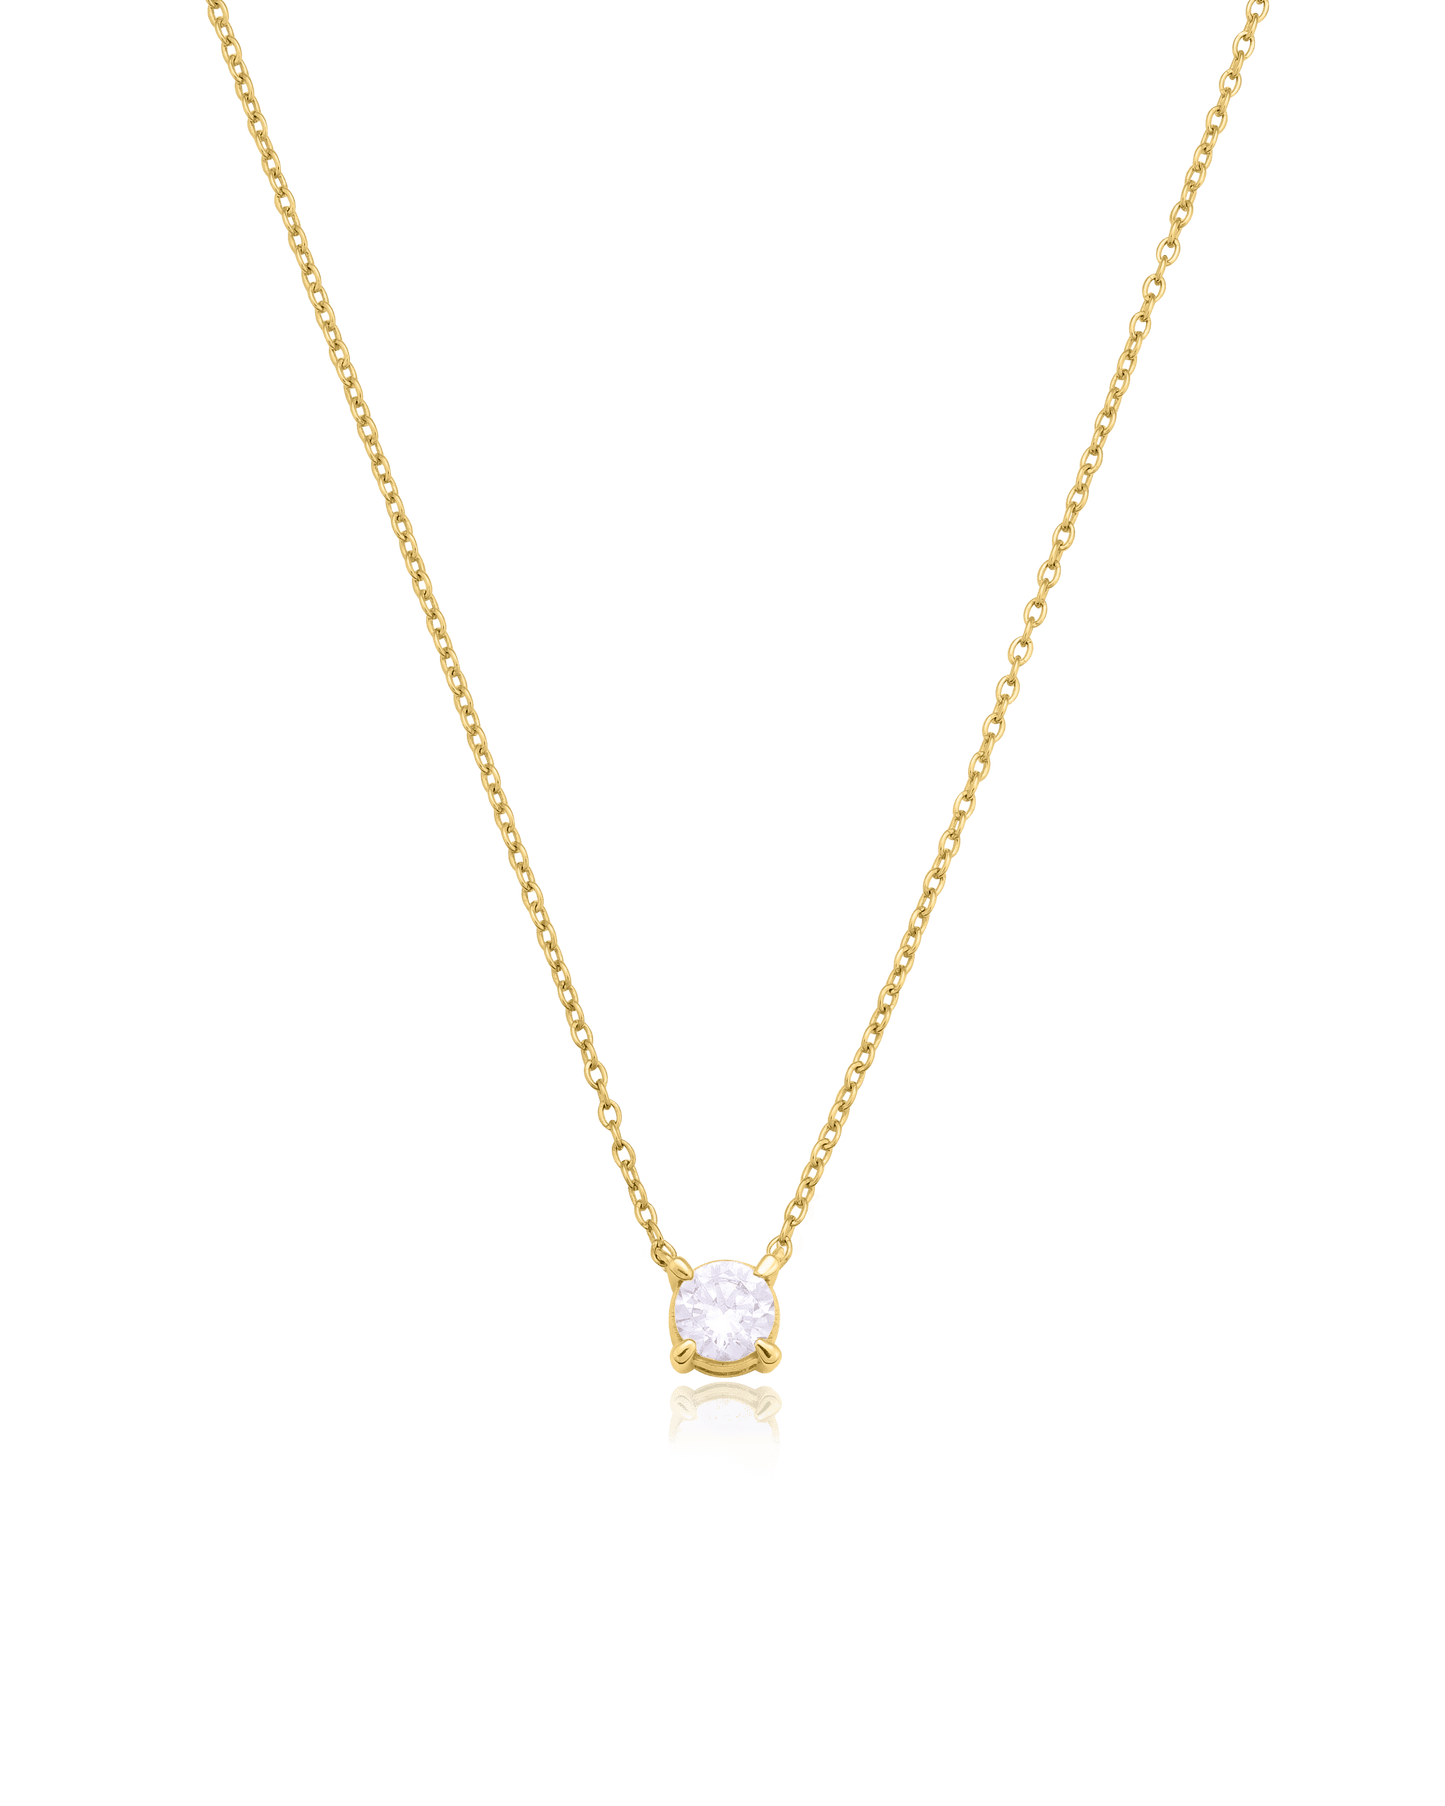 Collier Diamant Rond Solitaire - Or Jaune 14 carats Necklaces magal-dev 0.10 carats 40cm 